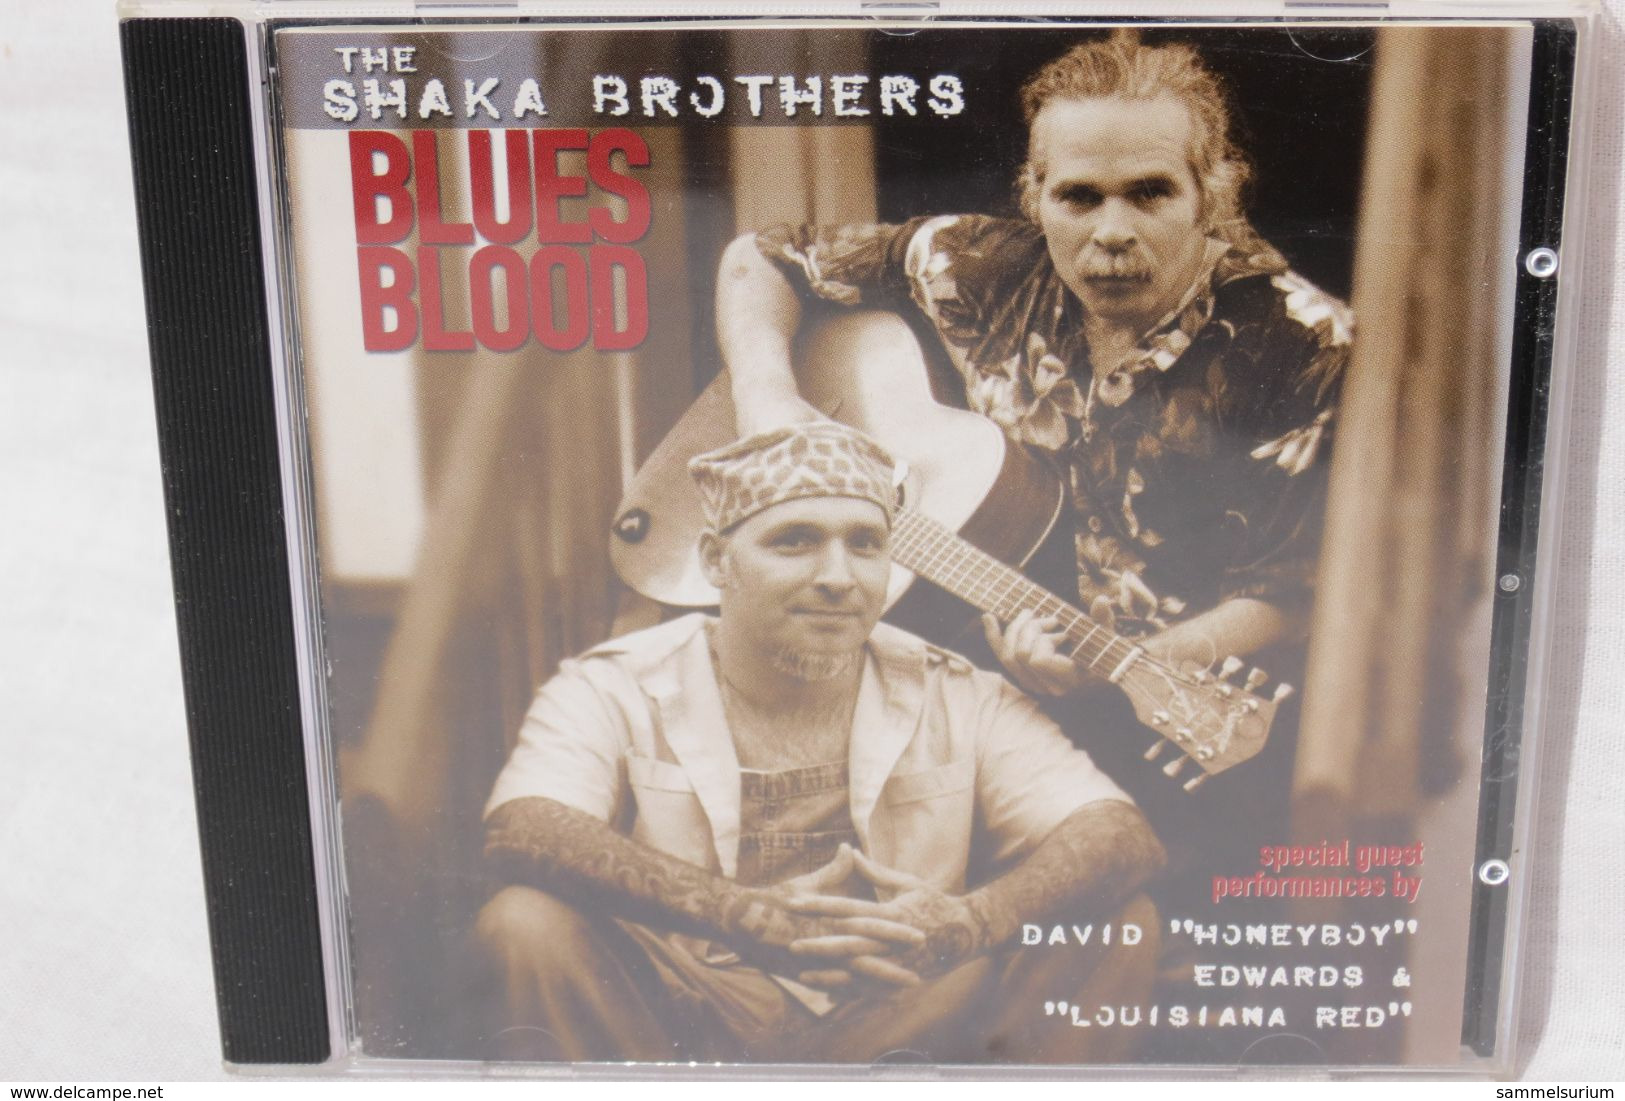 CD "The Shaka Brothers" Blues Blood - Blues